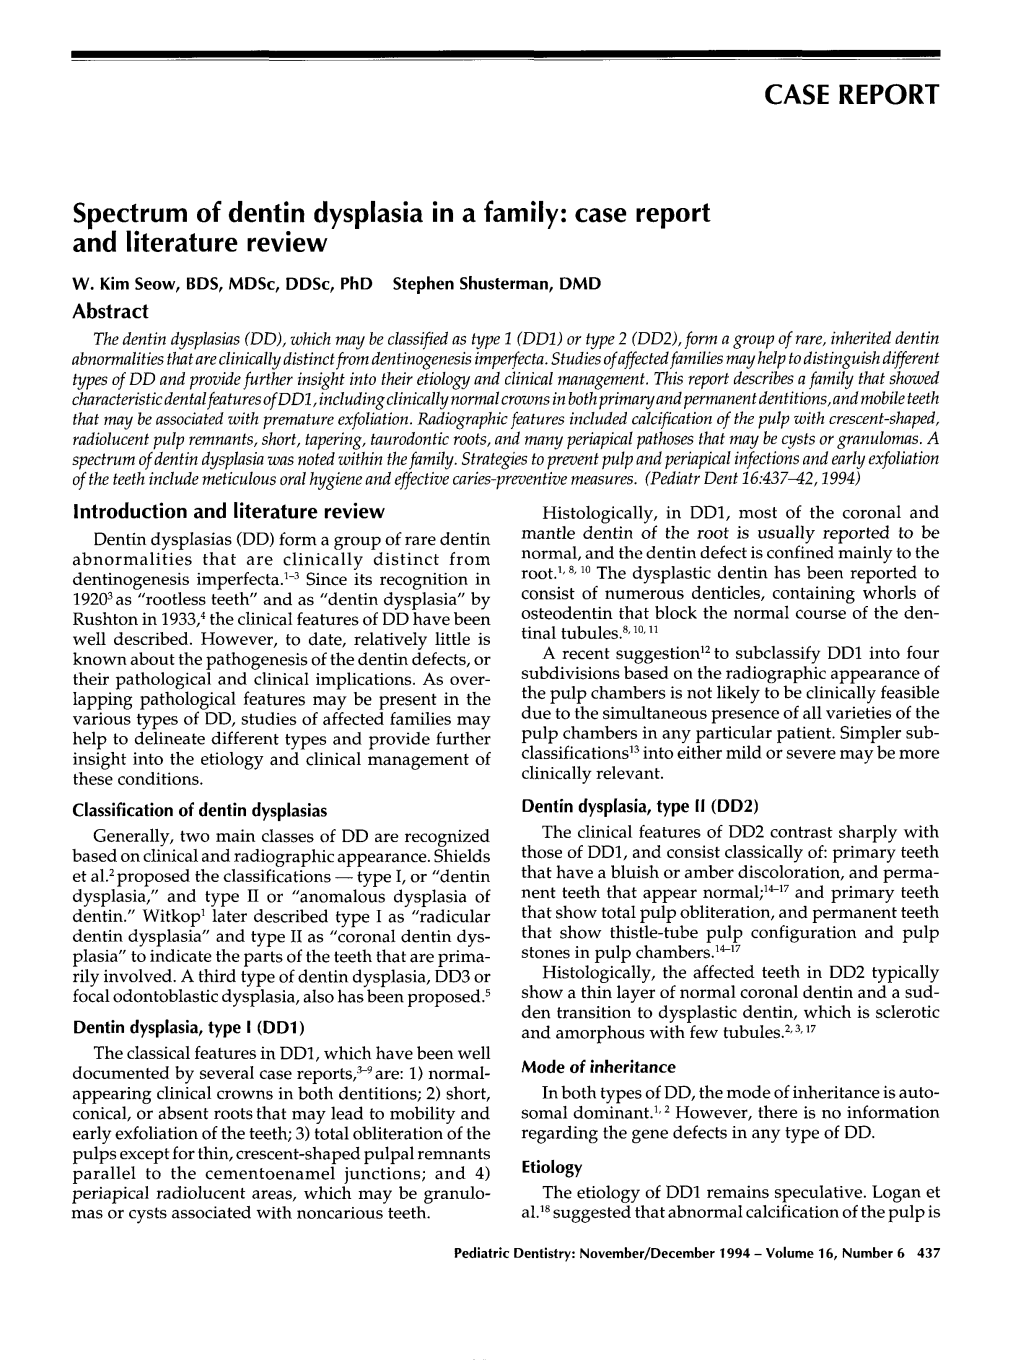 Spectrum of Dentin Dysplasia in a Family